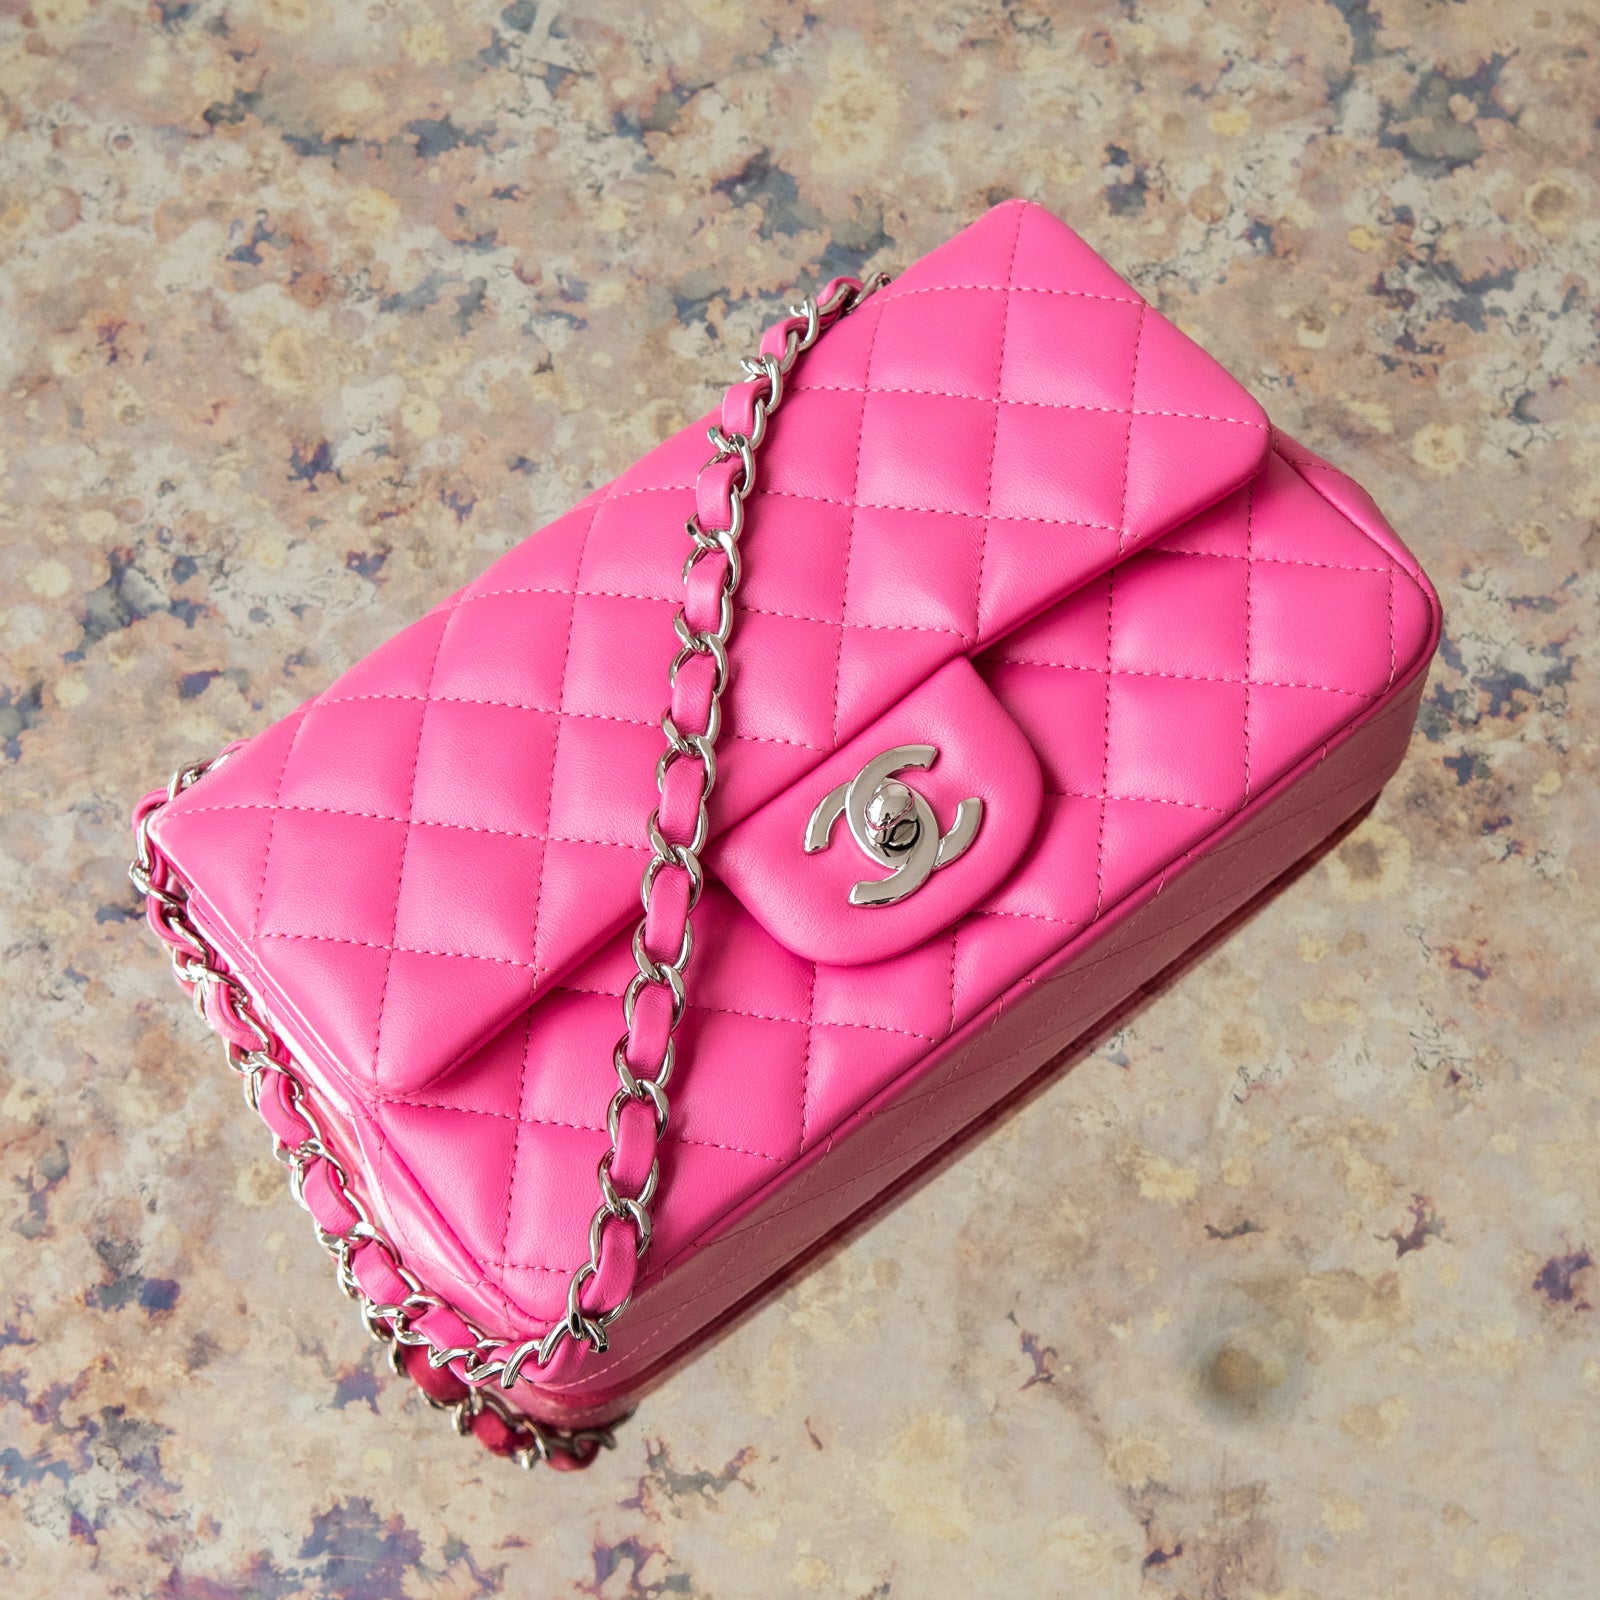 Chanel Pink Mini Rectangular Flap Bag - Image 12 of 13